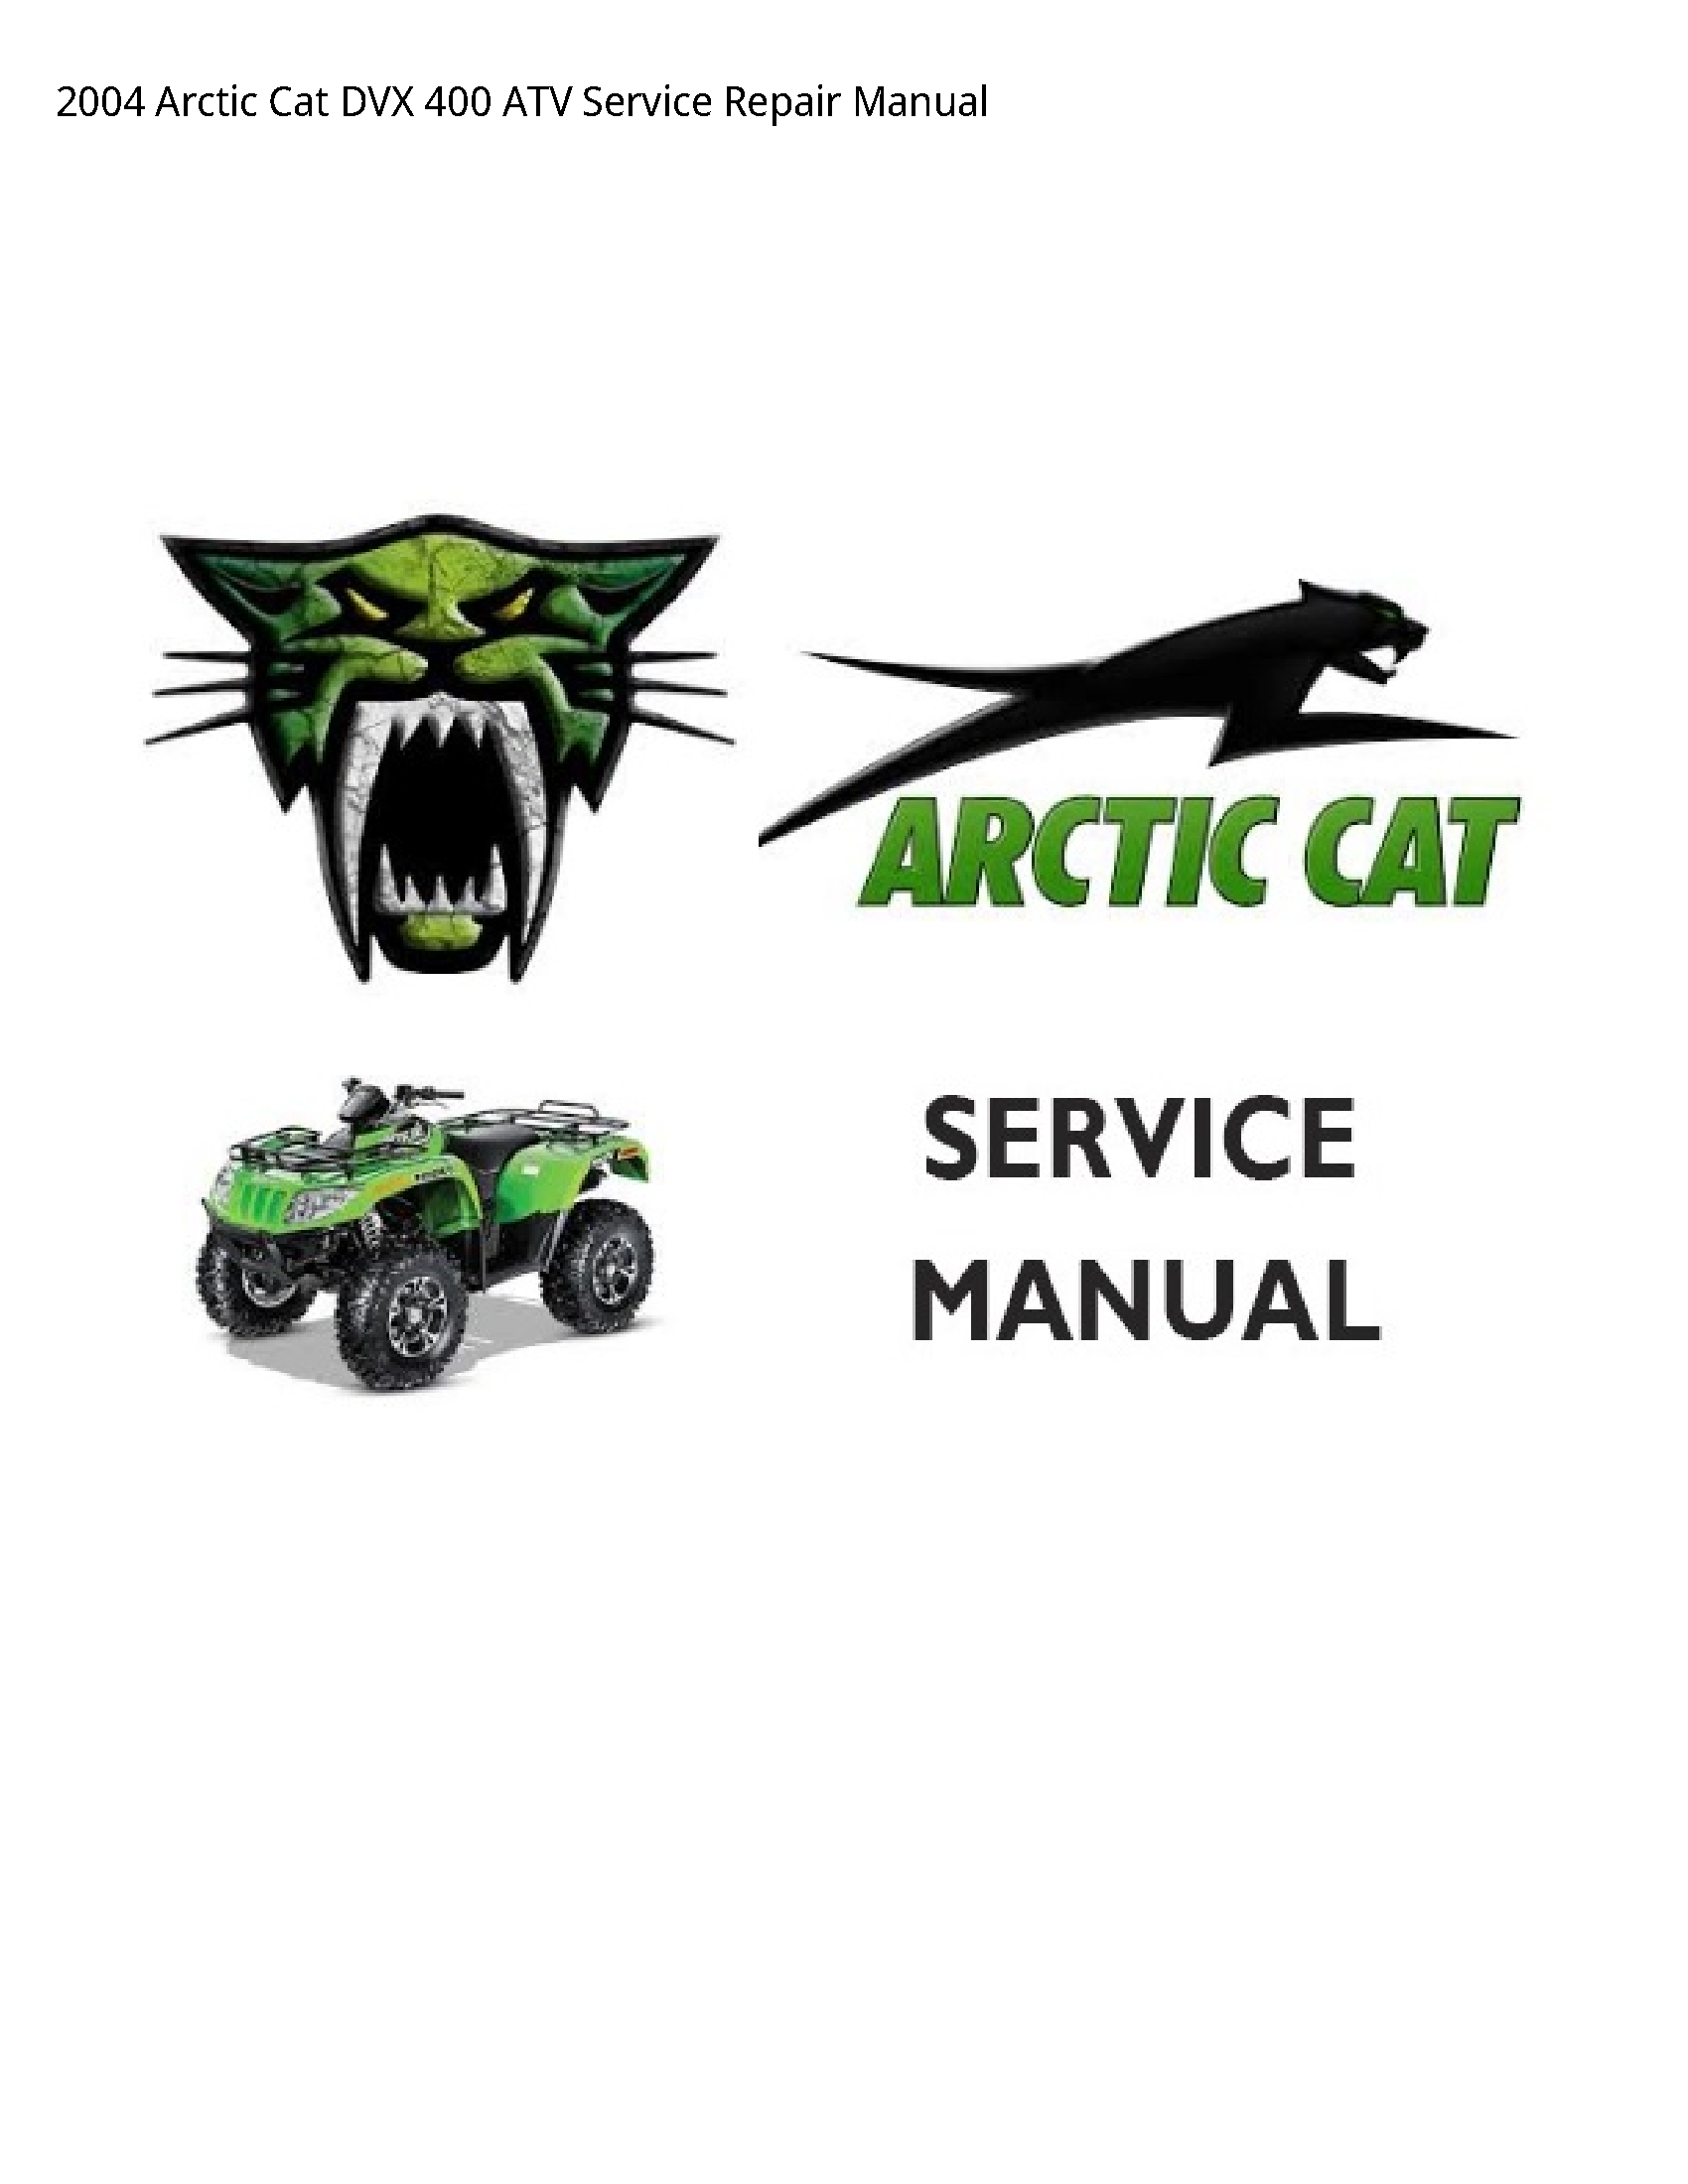 Arctic Cat 400 DVX ATV manual